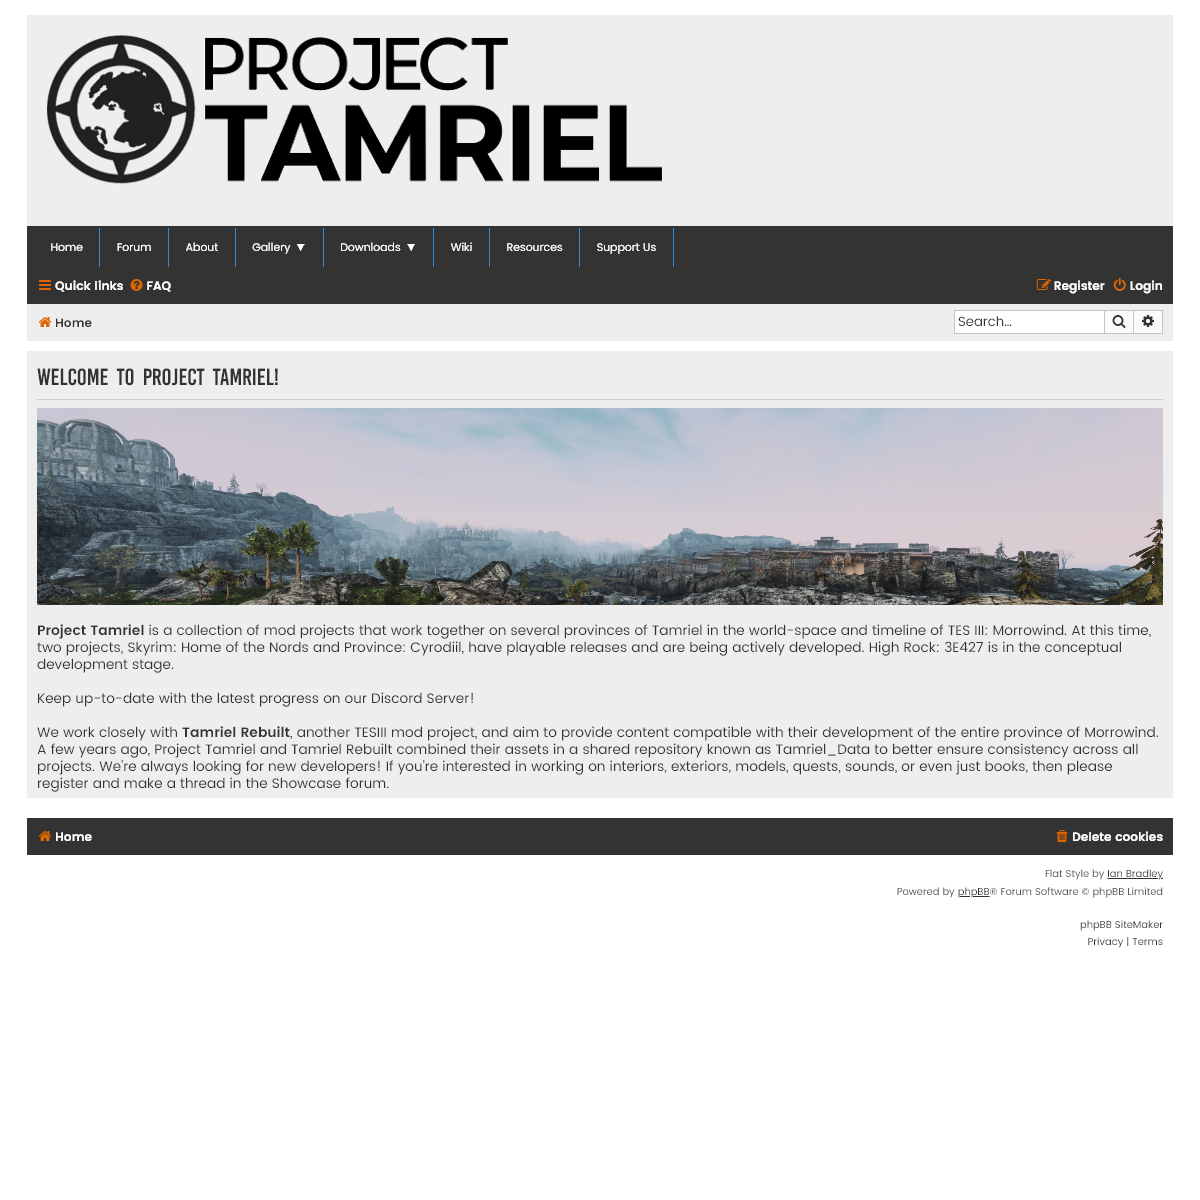 A complete backup of project-tamriel.com